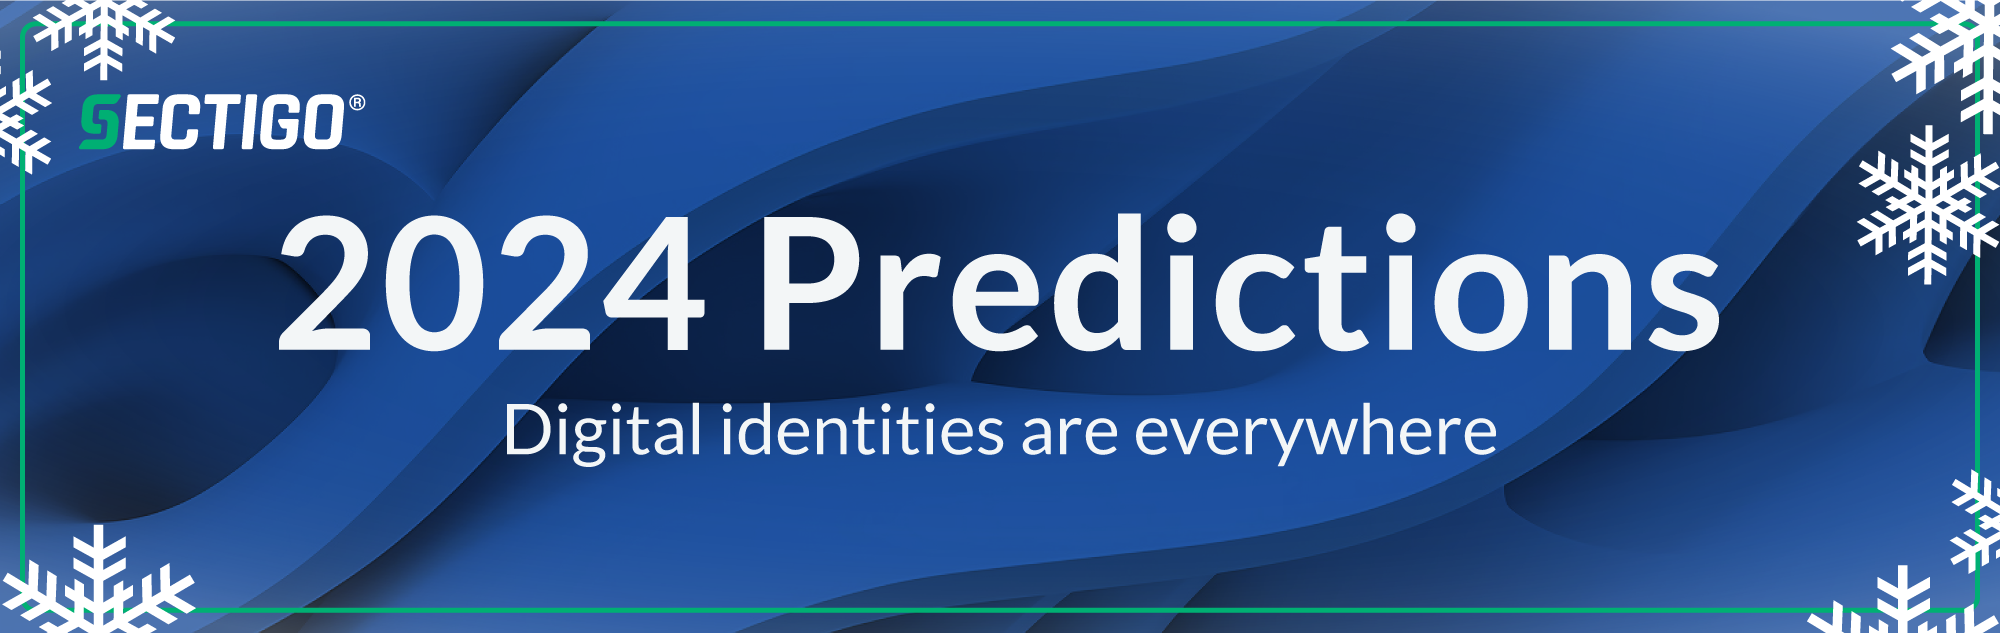 Prediction: Digital identities are everywhere